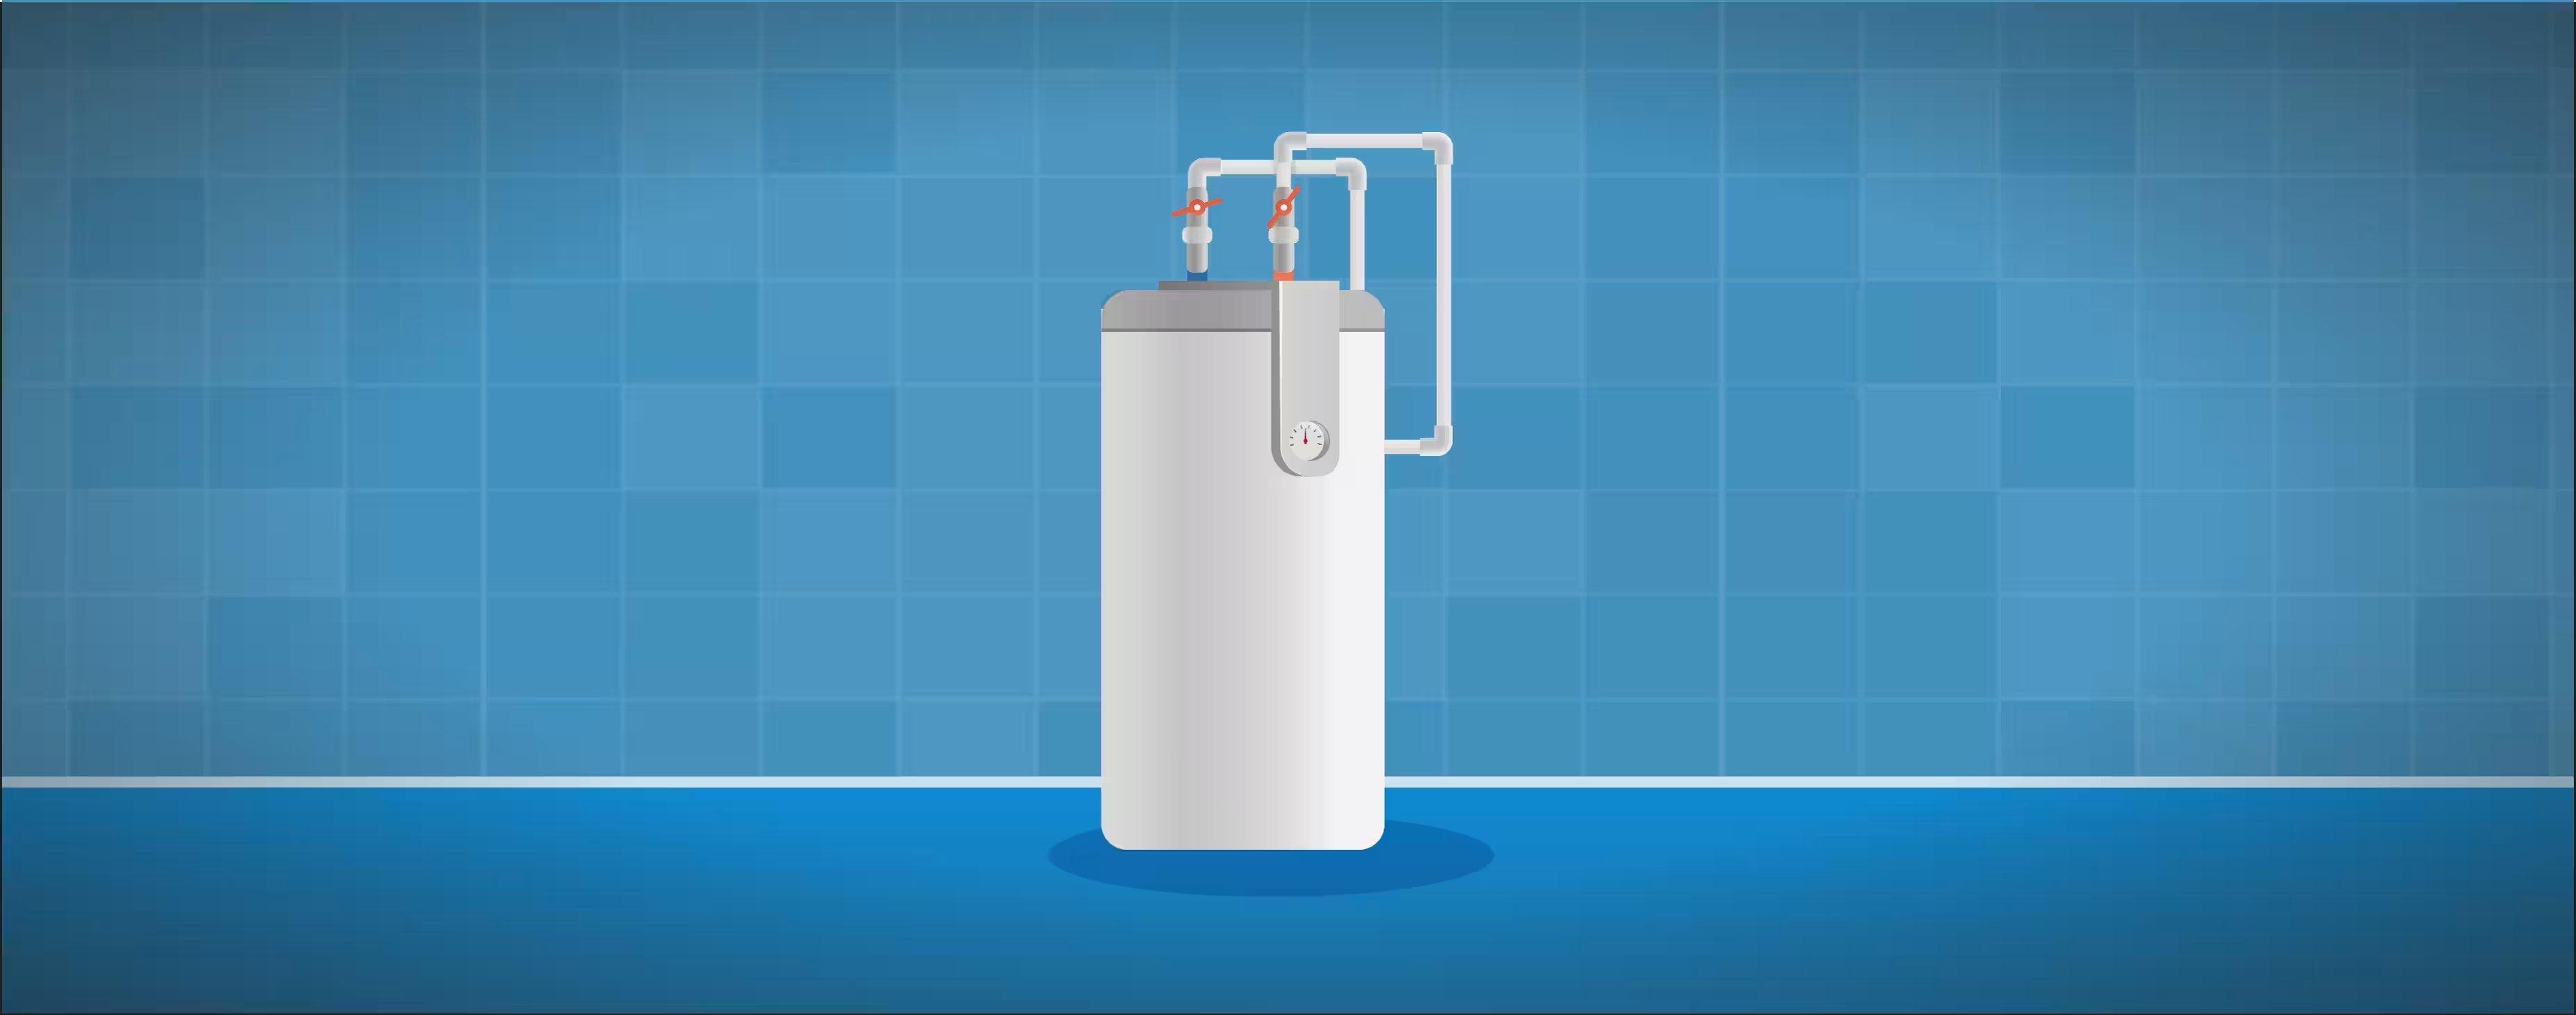 Water Heater Maintenance Tips